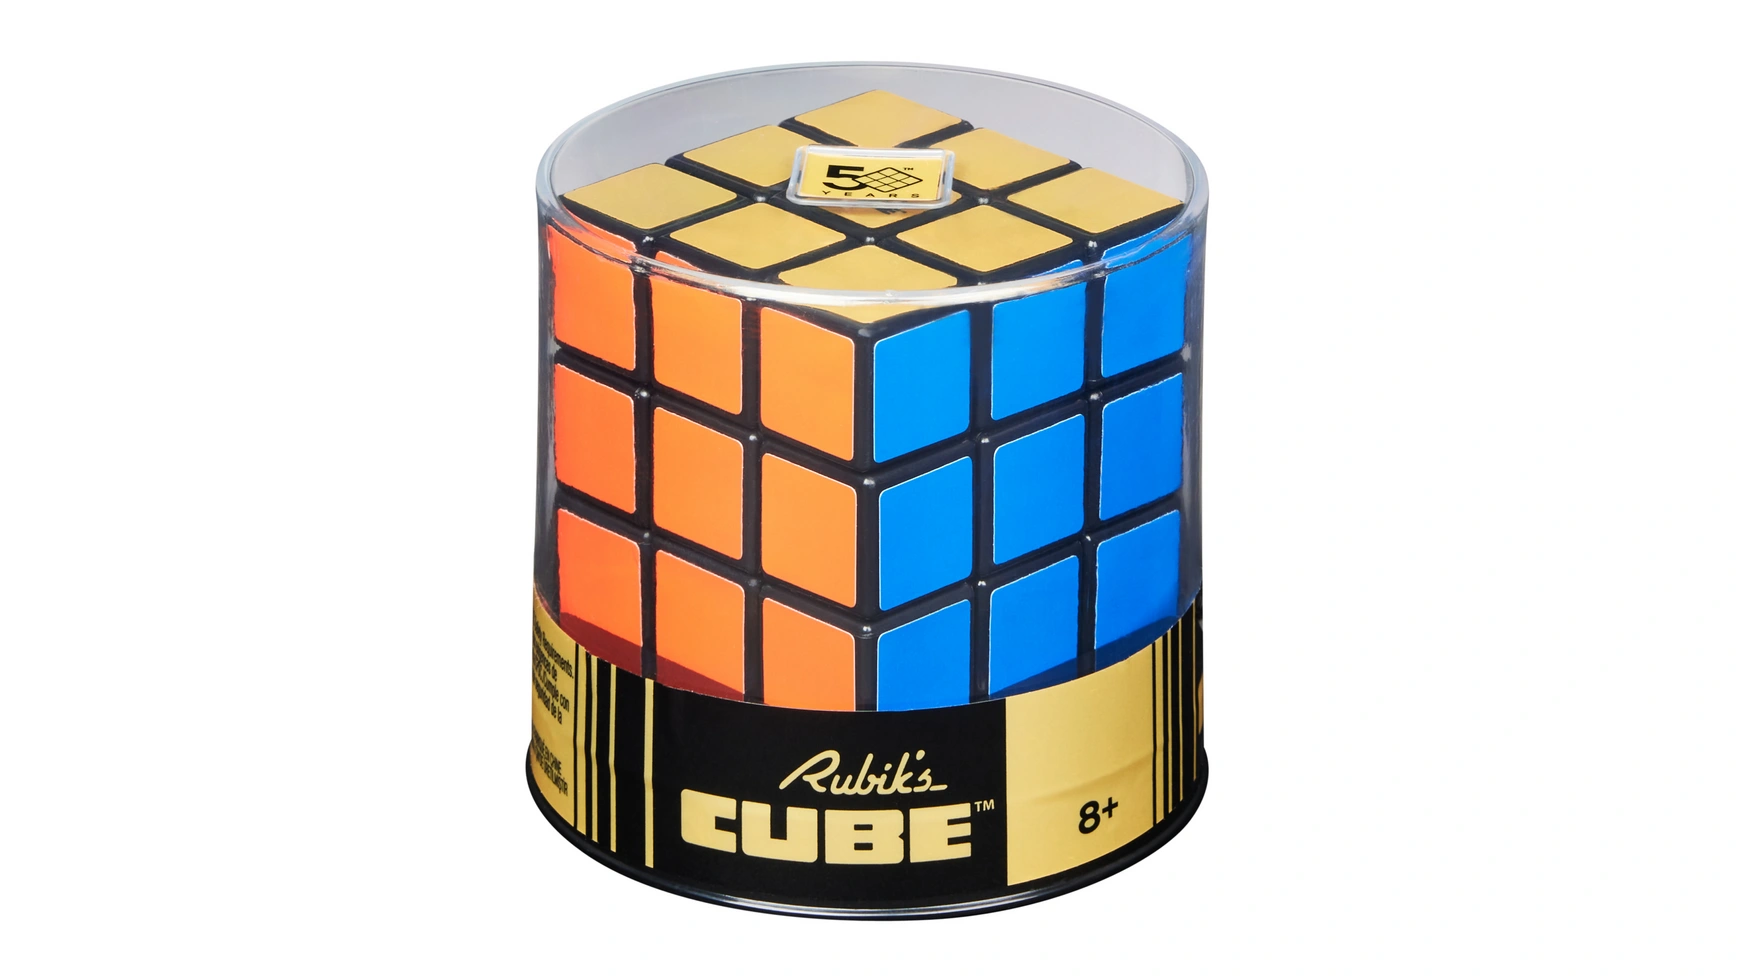 Ретро-кубик Рубика 3x3 Кубик Рубика кубик 3x3, внешний вид которого напоминает оригинал 50-летней давности Spin Master головоломка rubiks кубик рубика 3x3 брелок